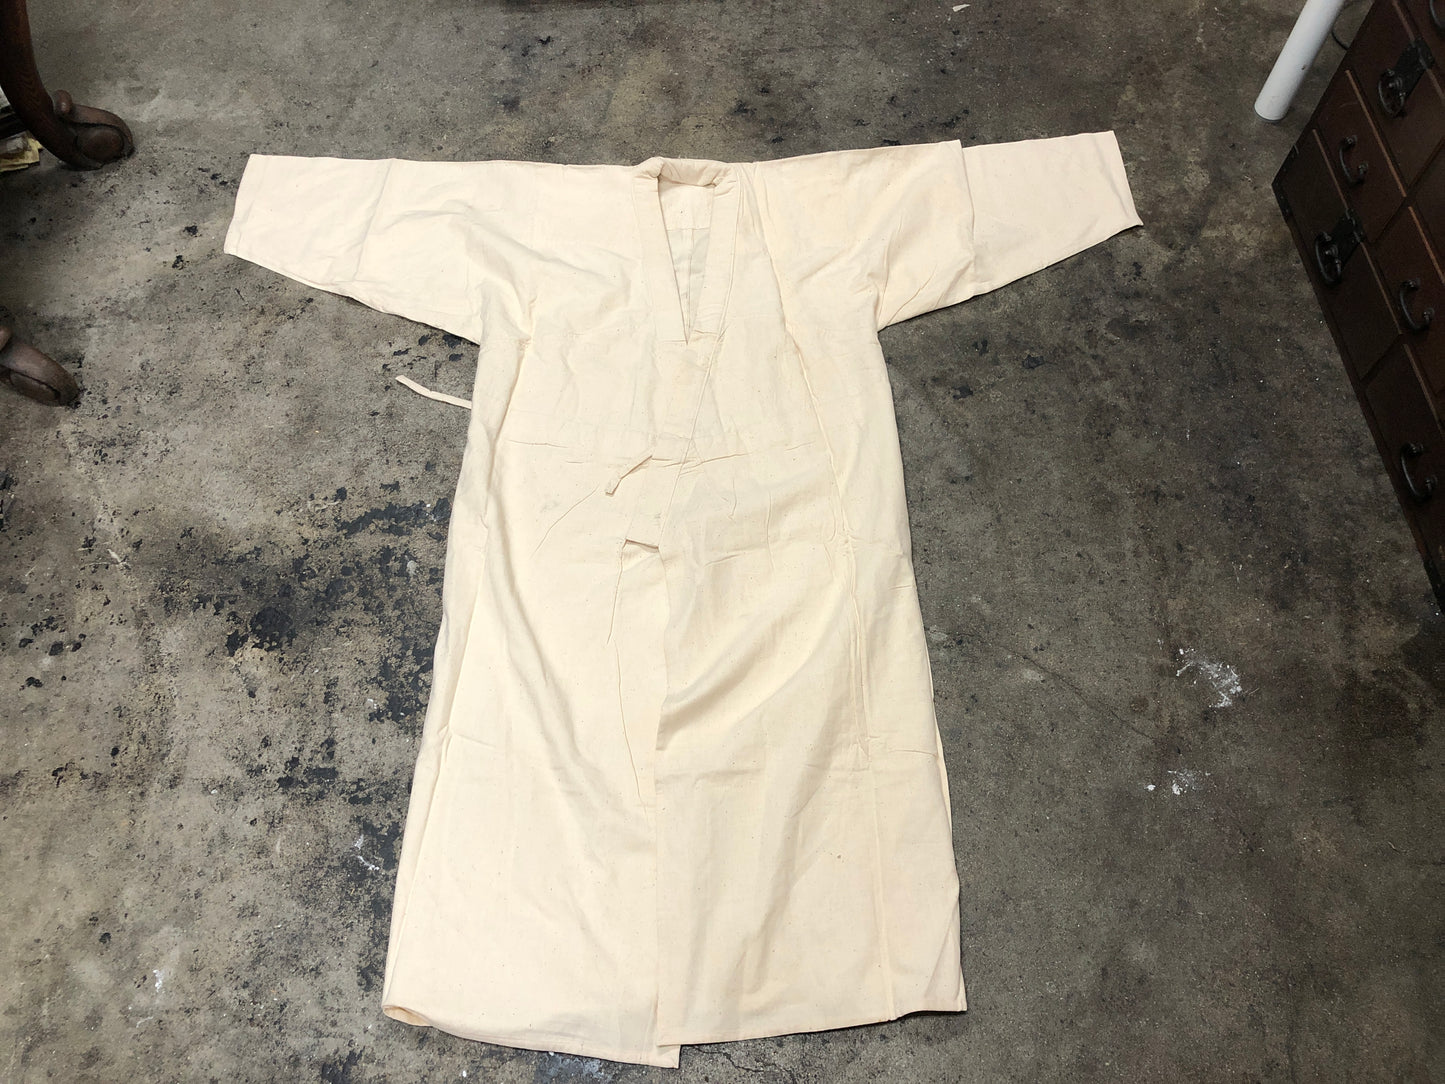 Y4062 Imperial Japan Army White coat robe mark military Japanese WW2 vintage